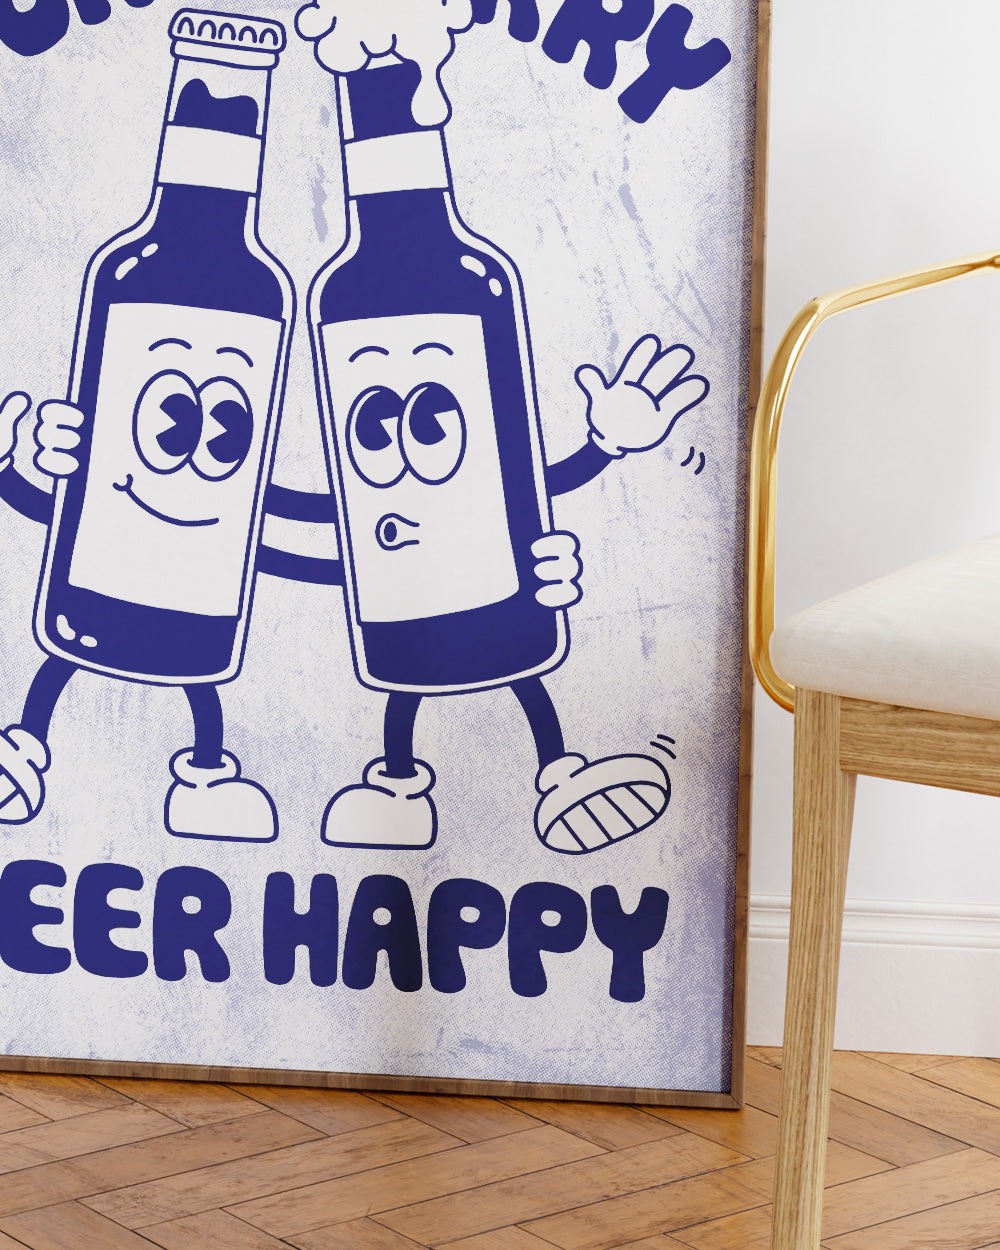 Don't Worry Beer Happy Art Print